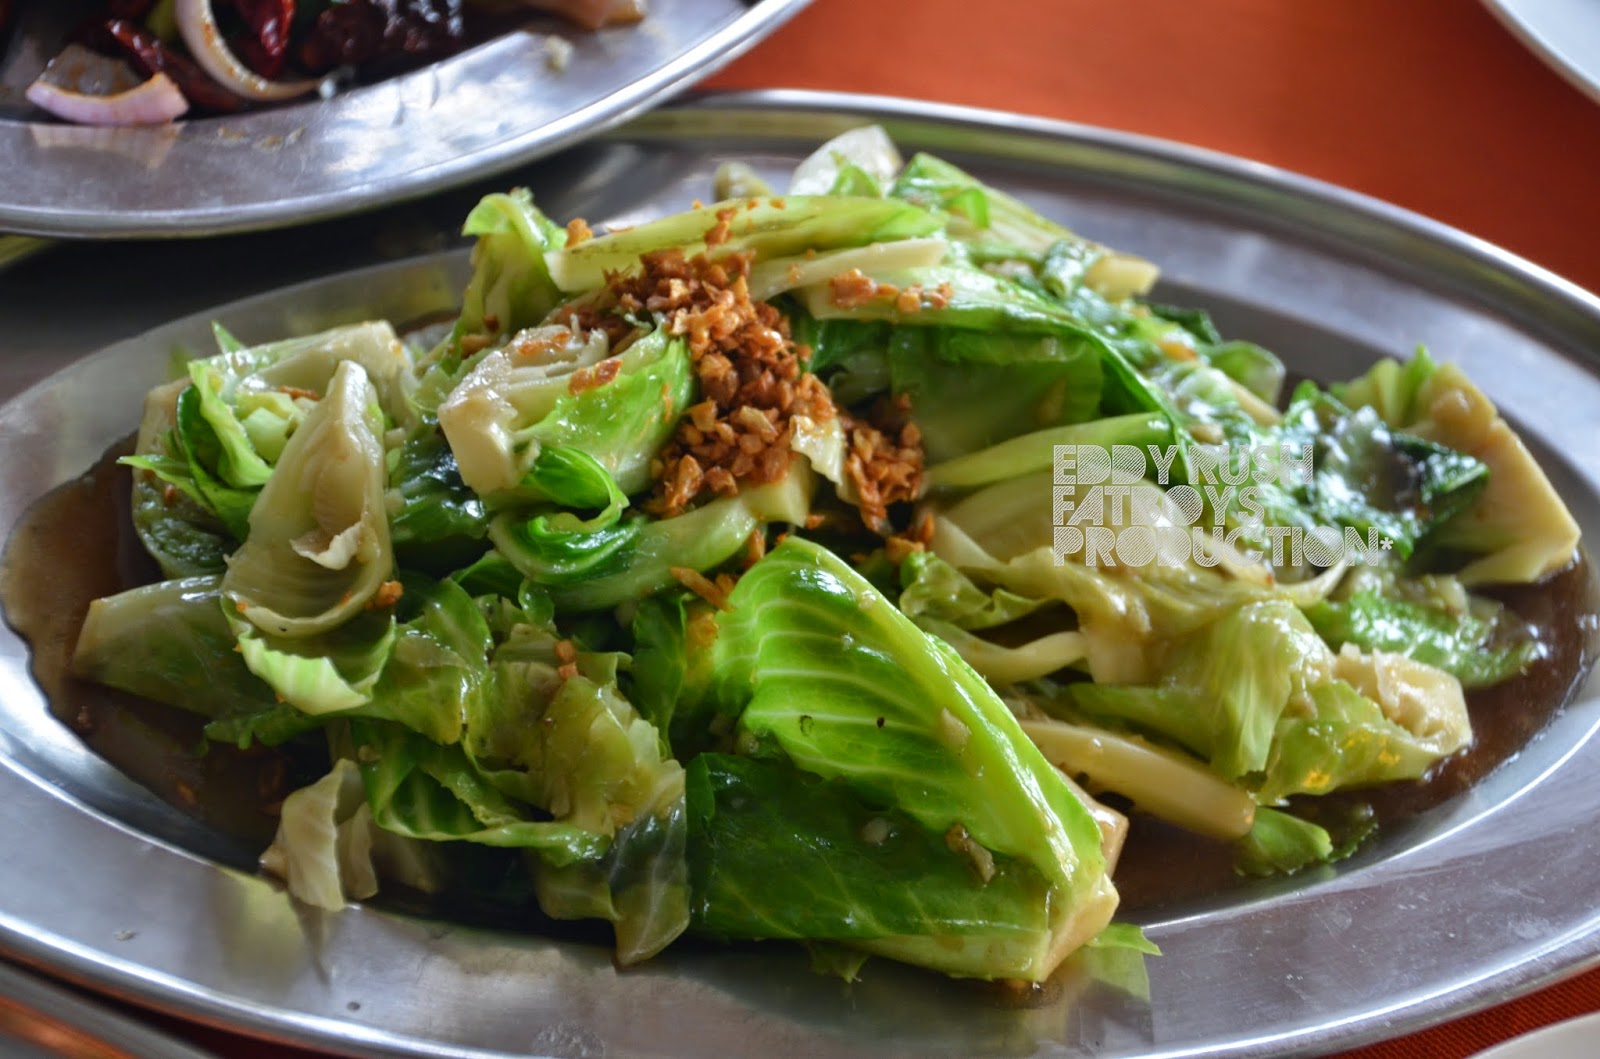 Kuala Selangor Seafood Restaurant - Footsteps - Jotaro's Travels: YummY